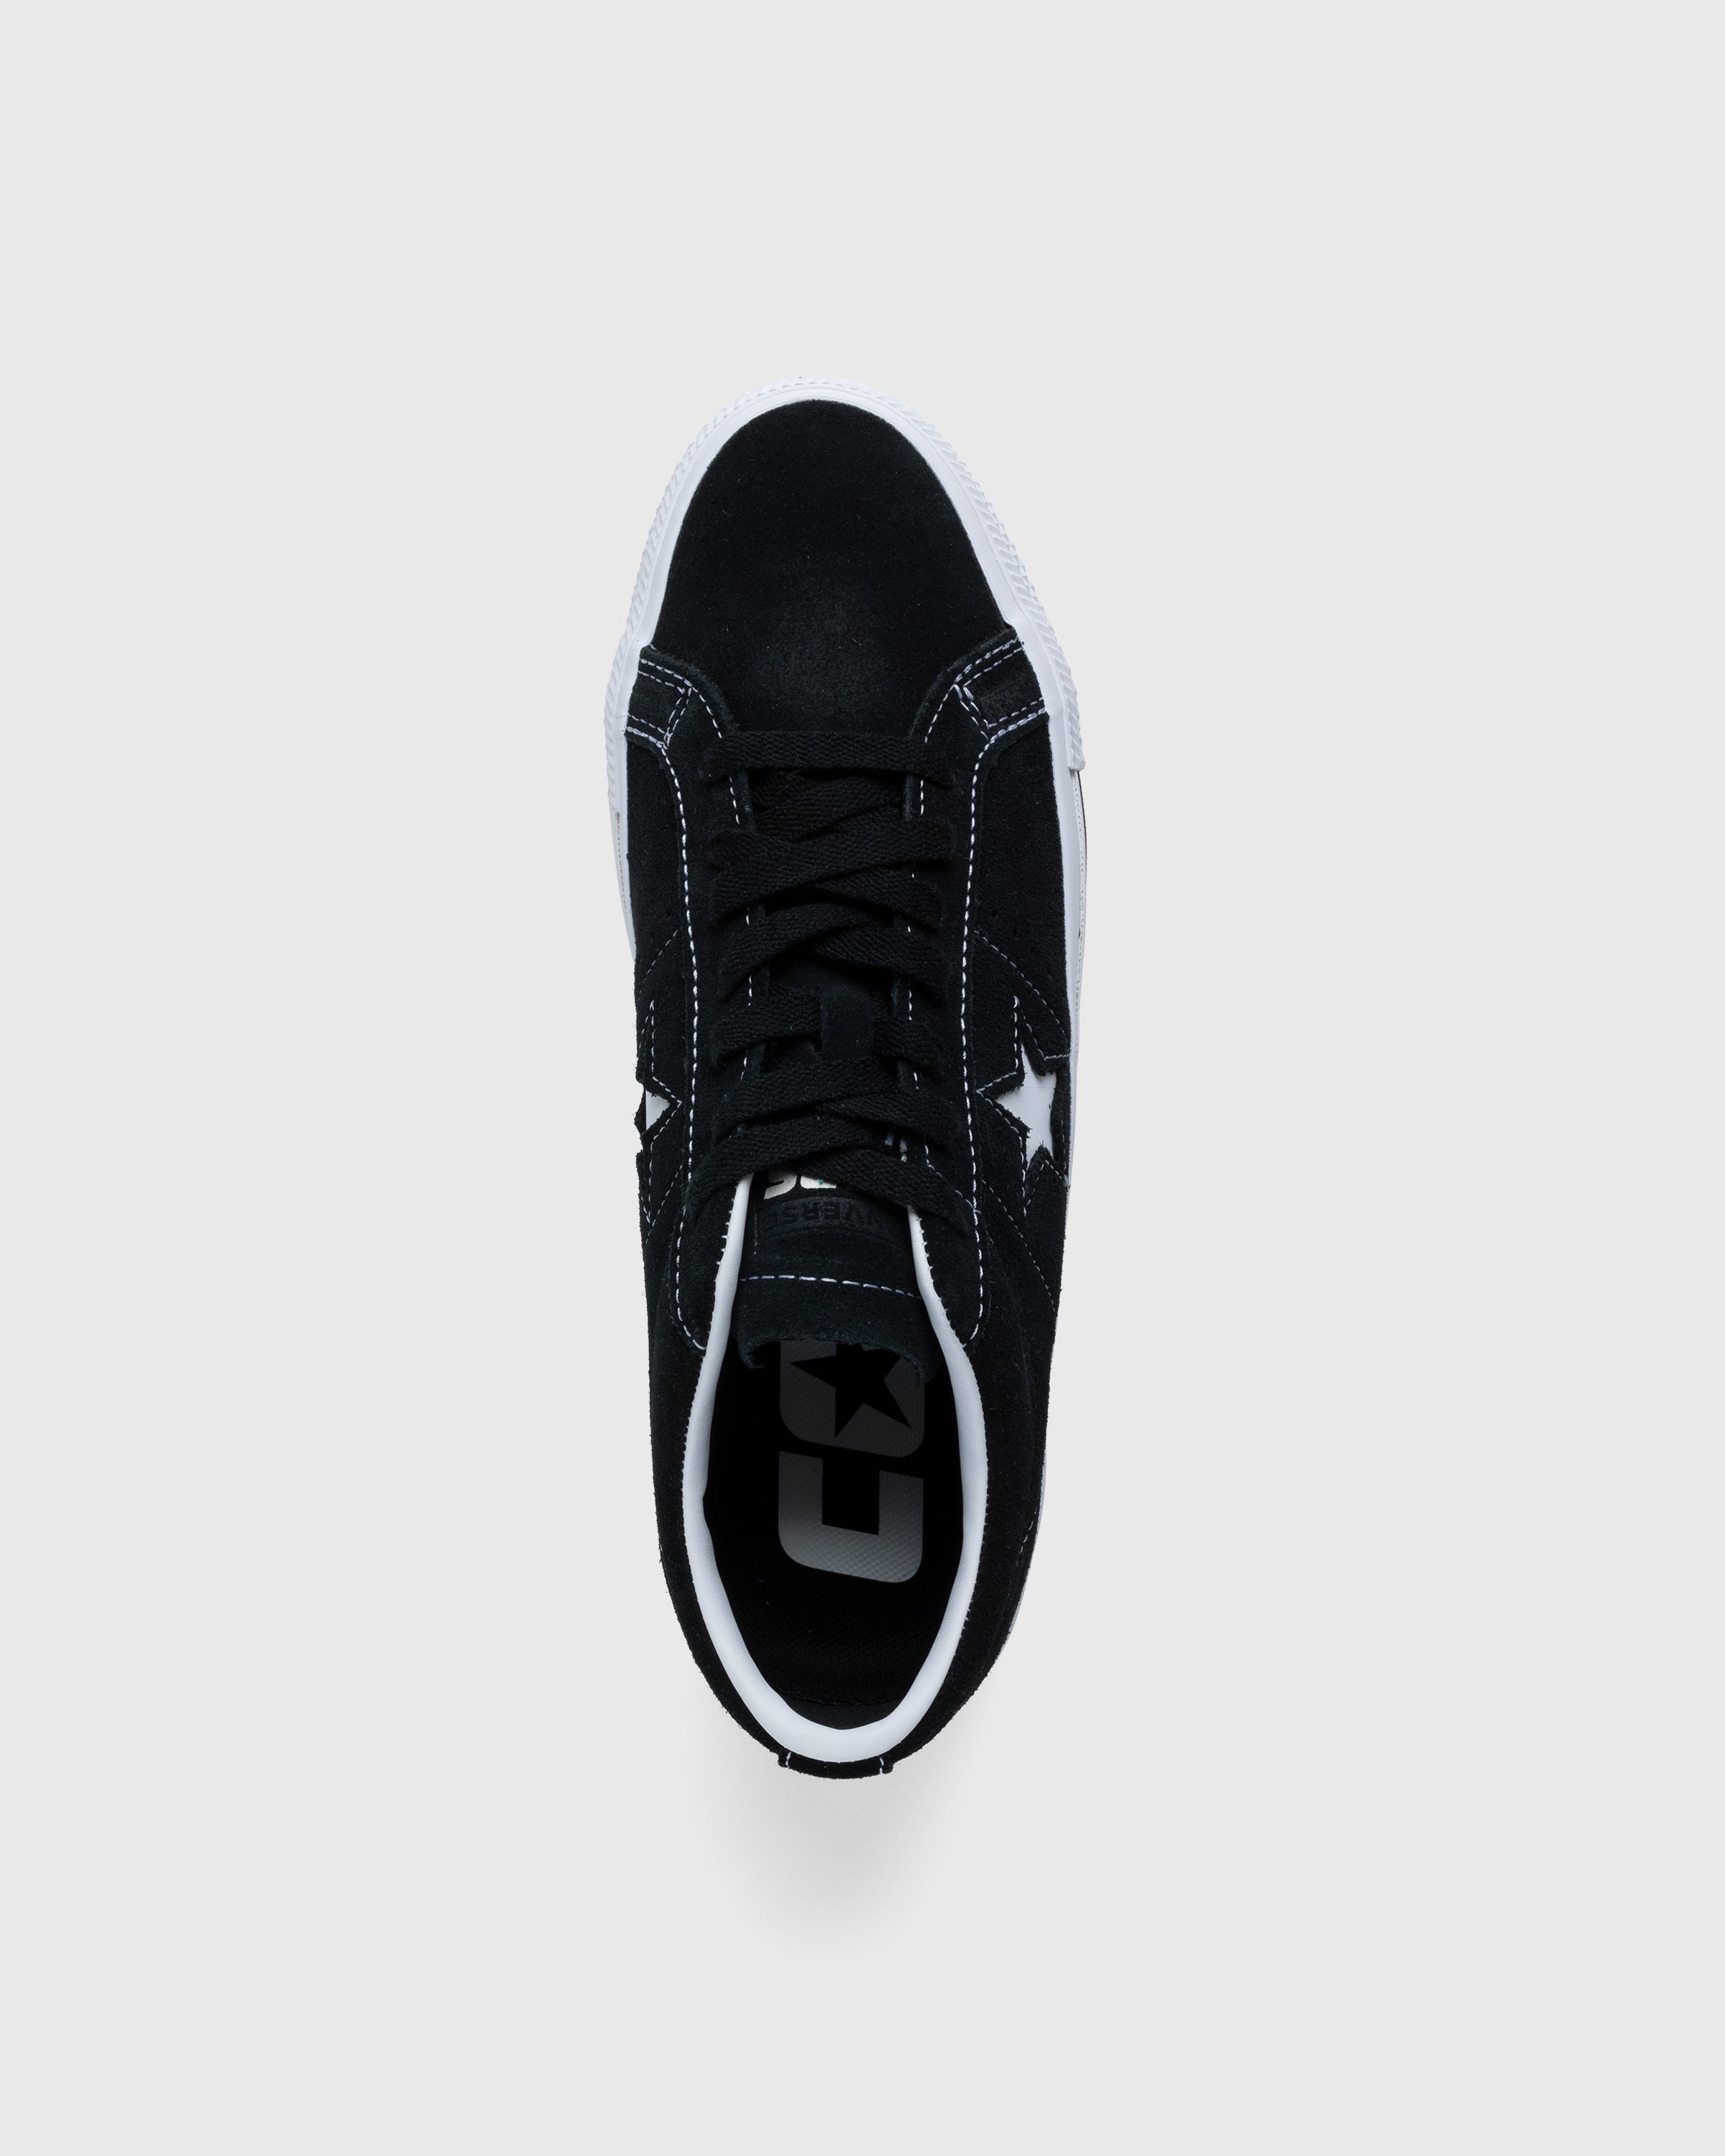 Converse - One Star Pro Black/White - Footwear - Black - Image 5